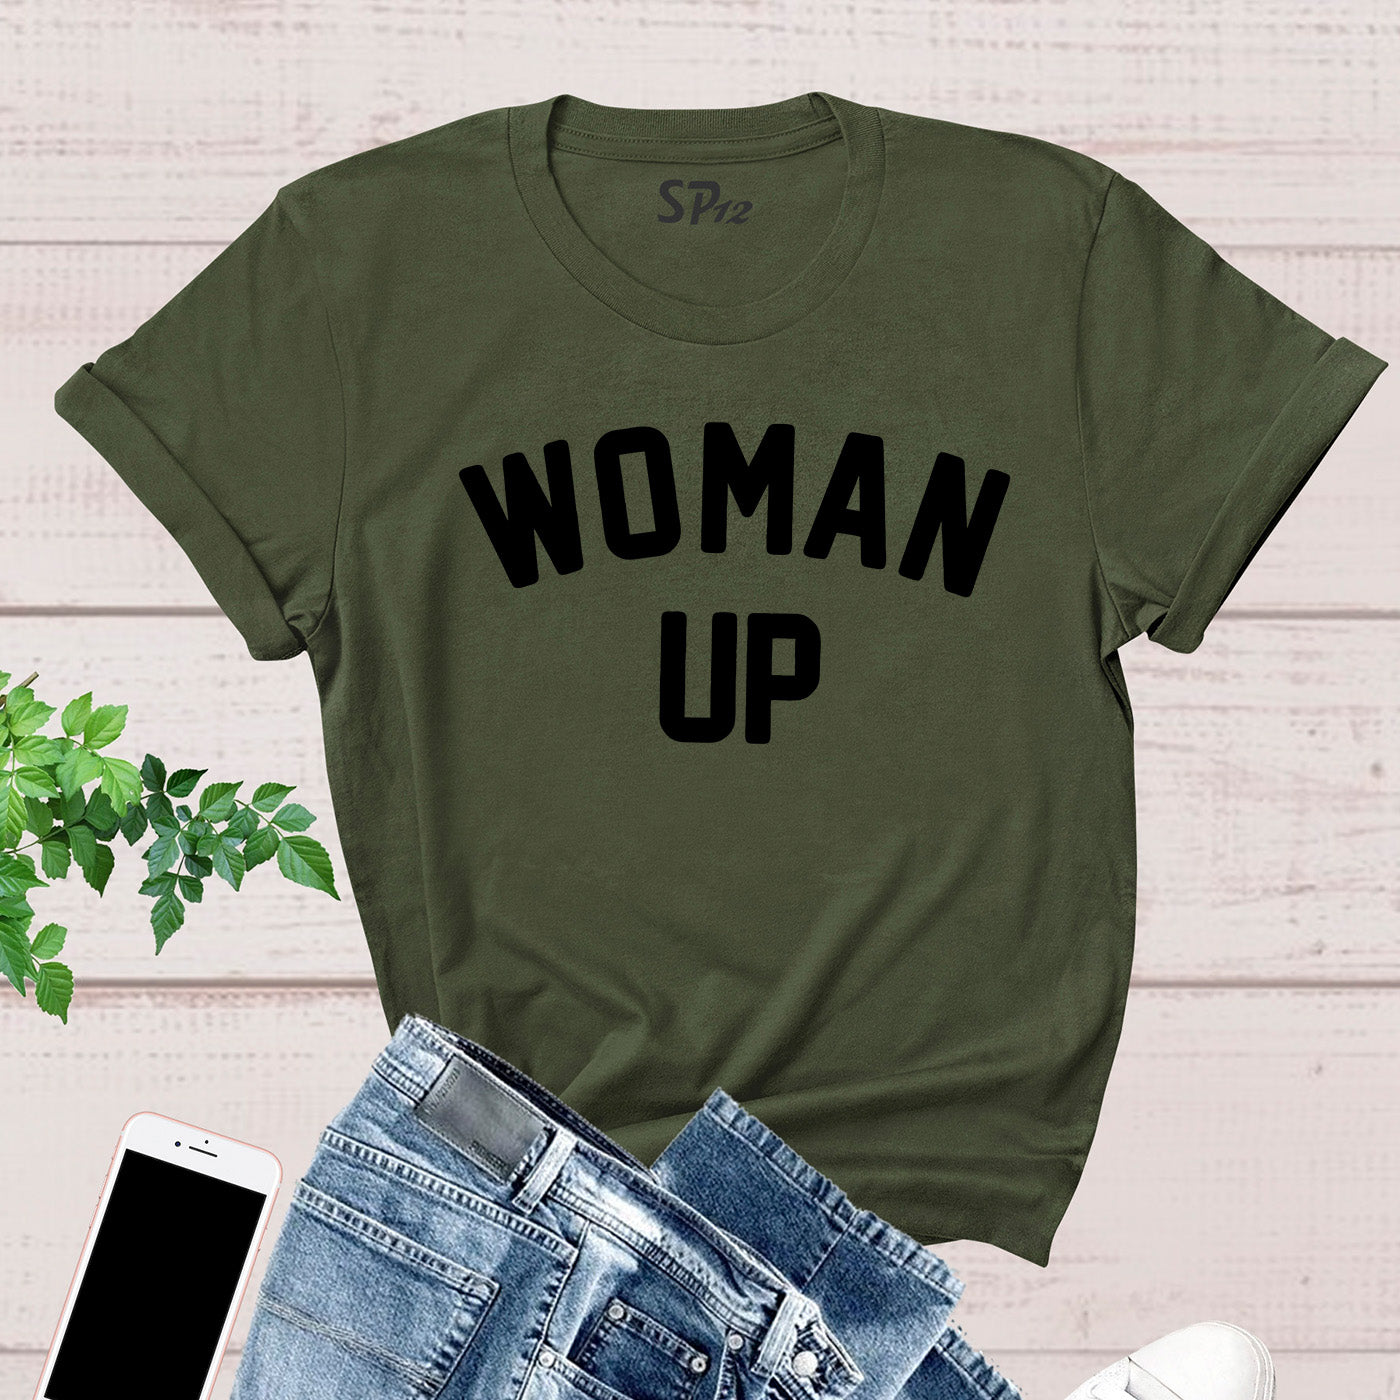 Women up T Shirt Women Right Shirt Women Power Shirt Women Gift Tee